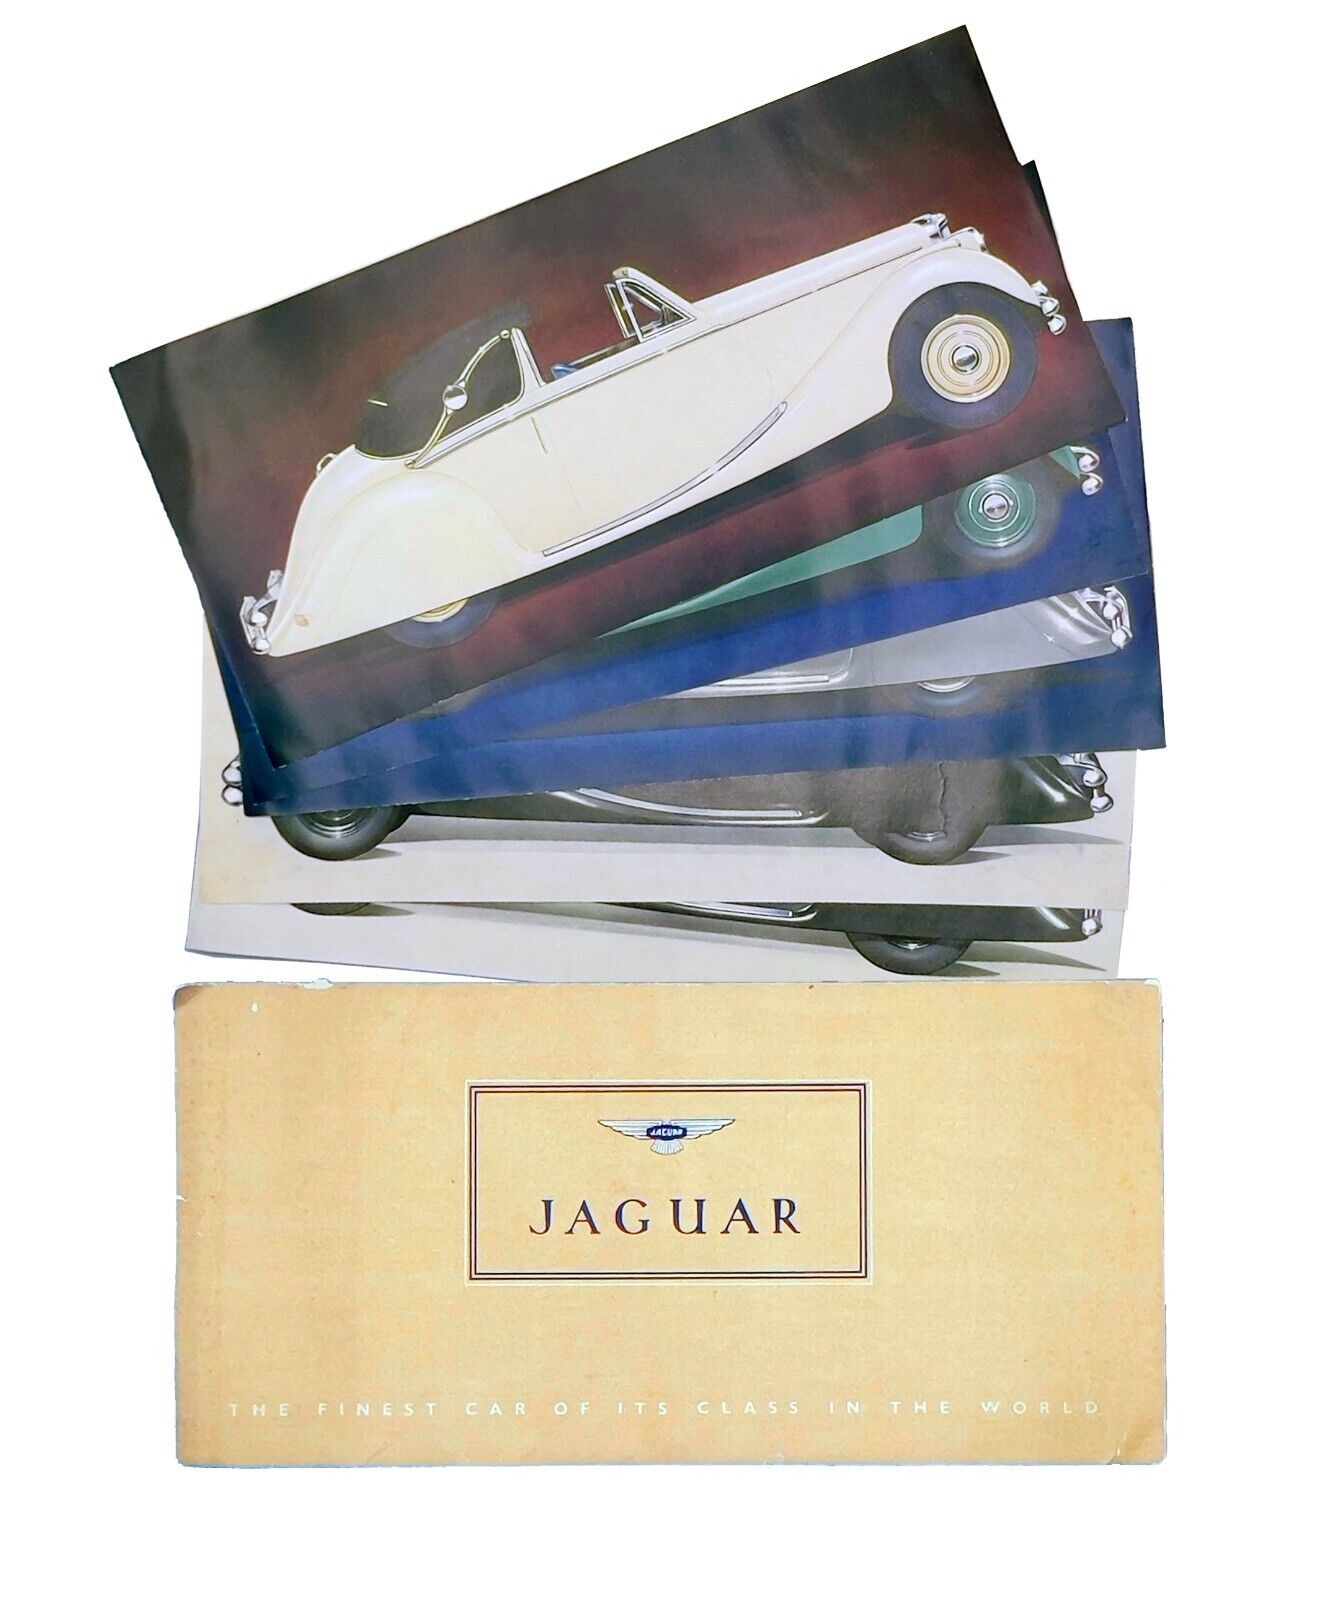 1950 Jaguar UK XK120, 14 x 7.5 in card portfolio in envelope with insert plates